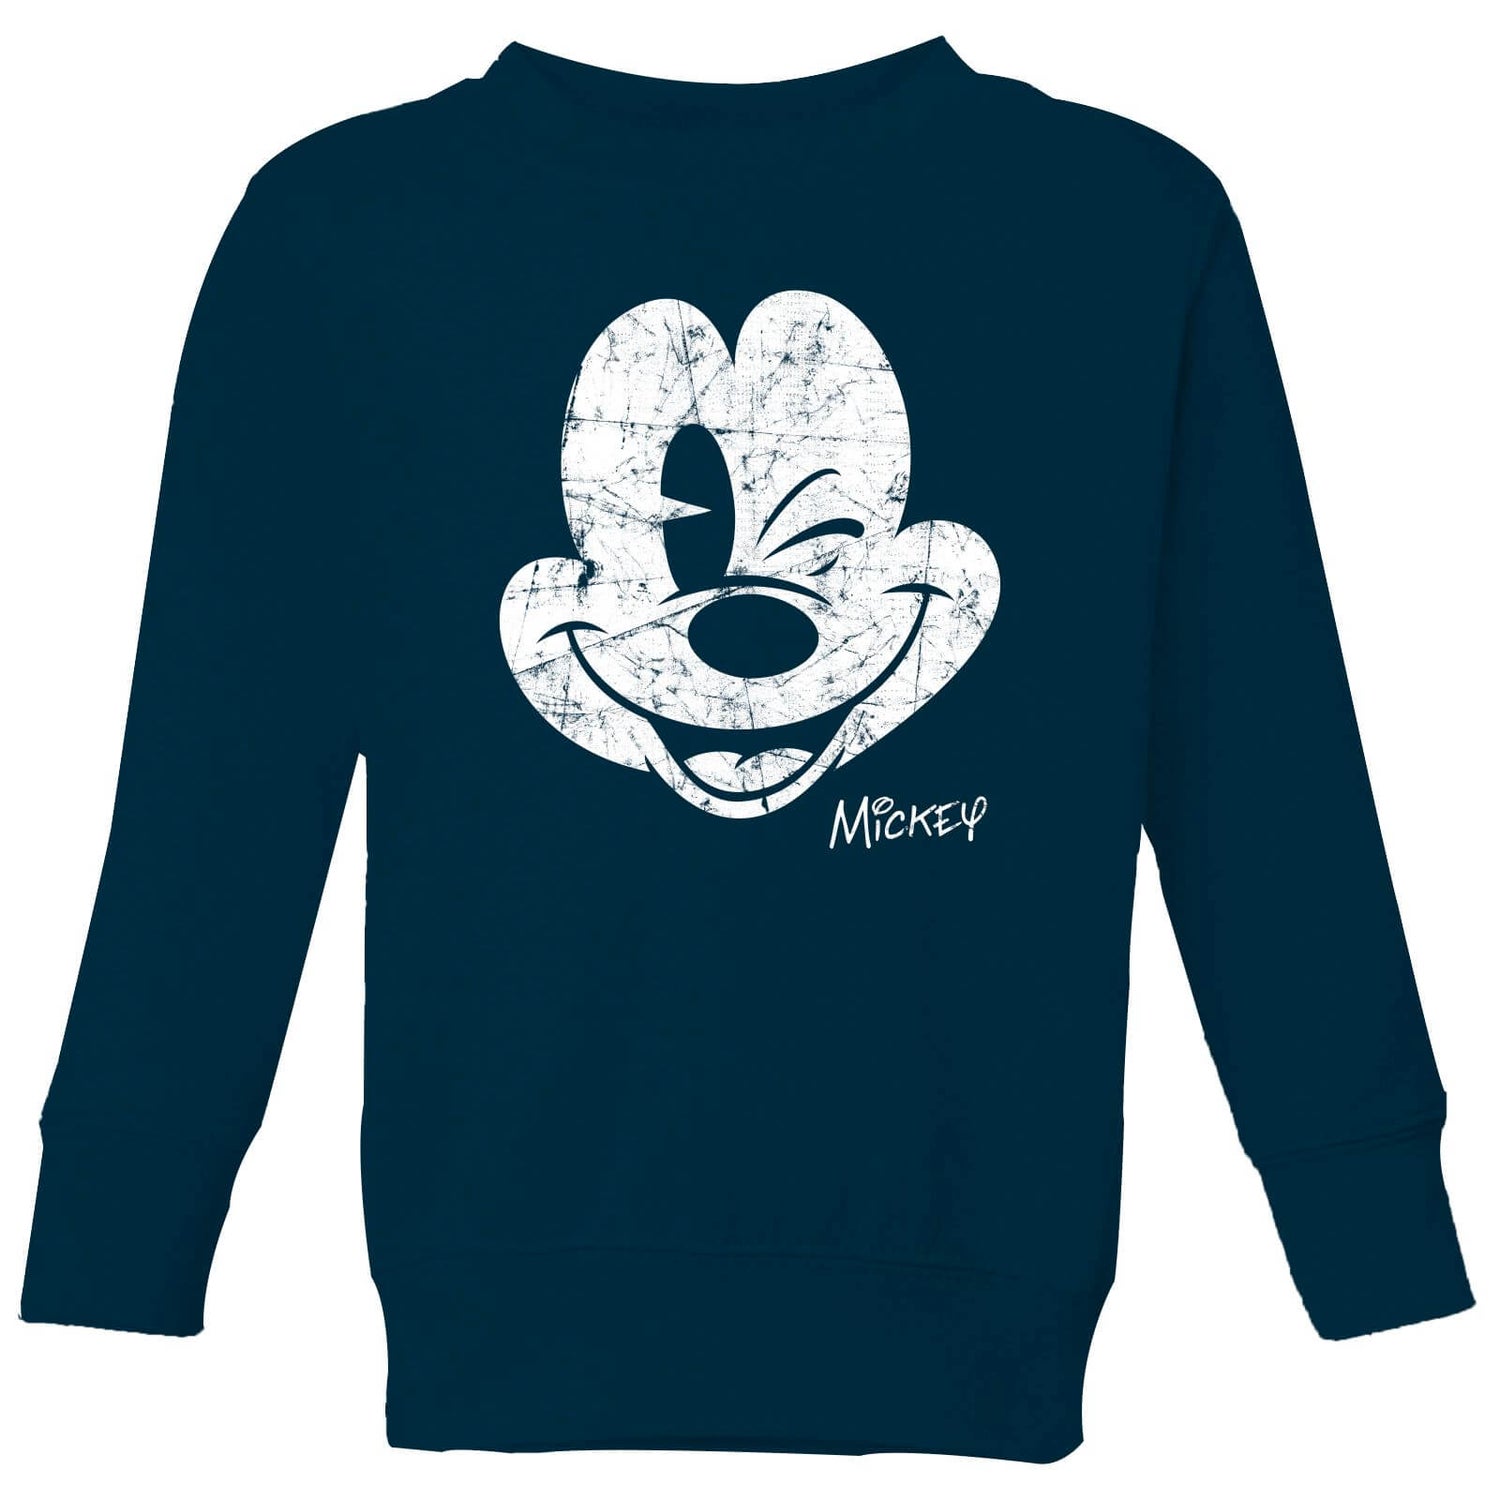 Disney Mickey Mouse Worn Face Kids' Sweatshirt - Navy